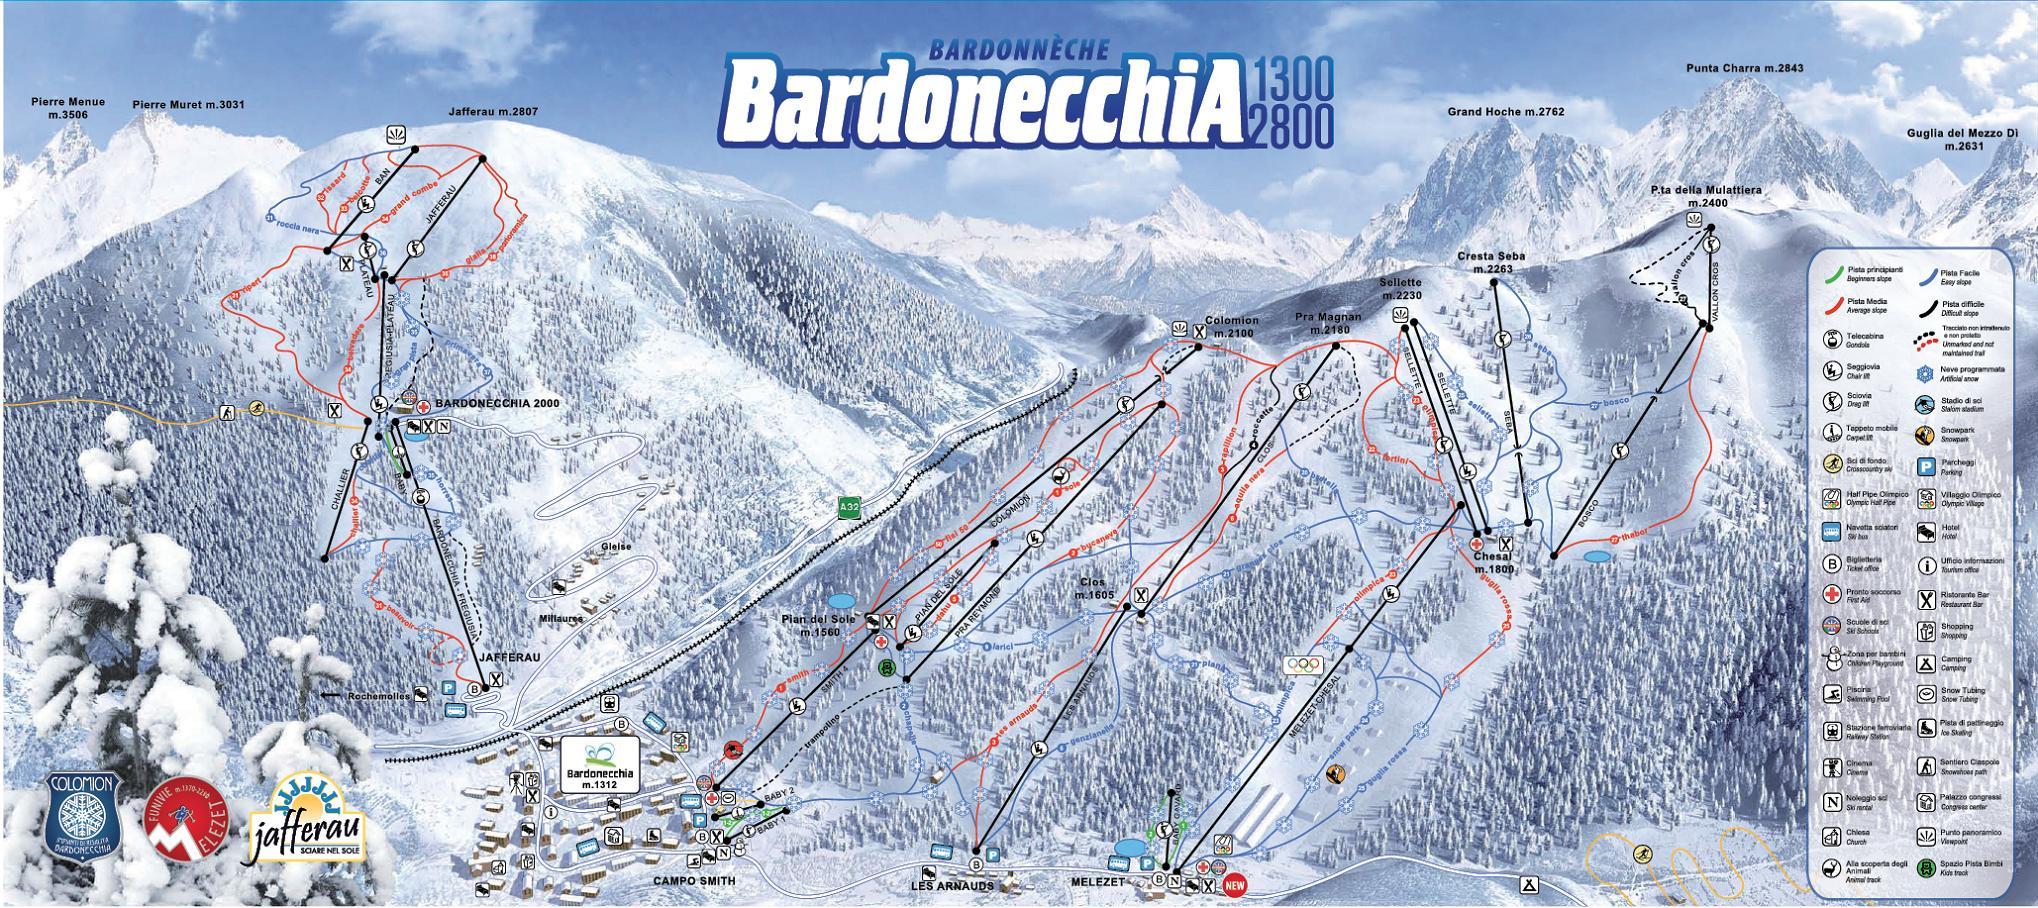 Pistes Map Of Bardonecchia